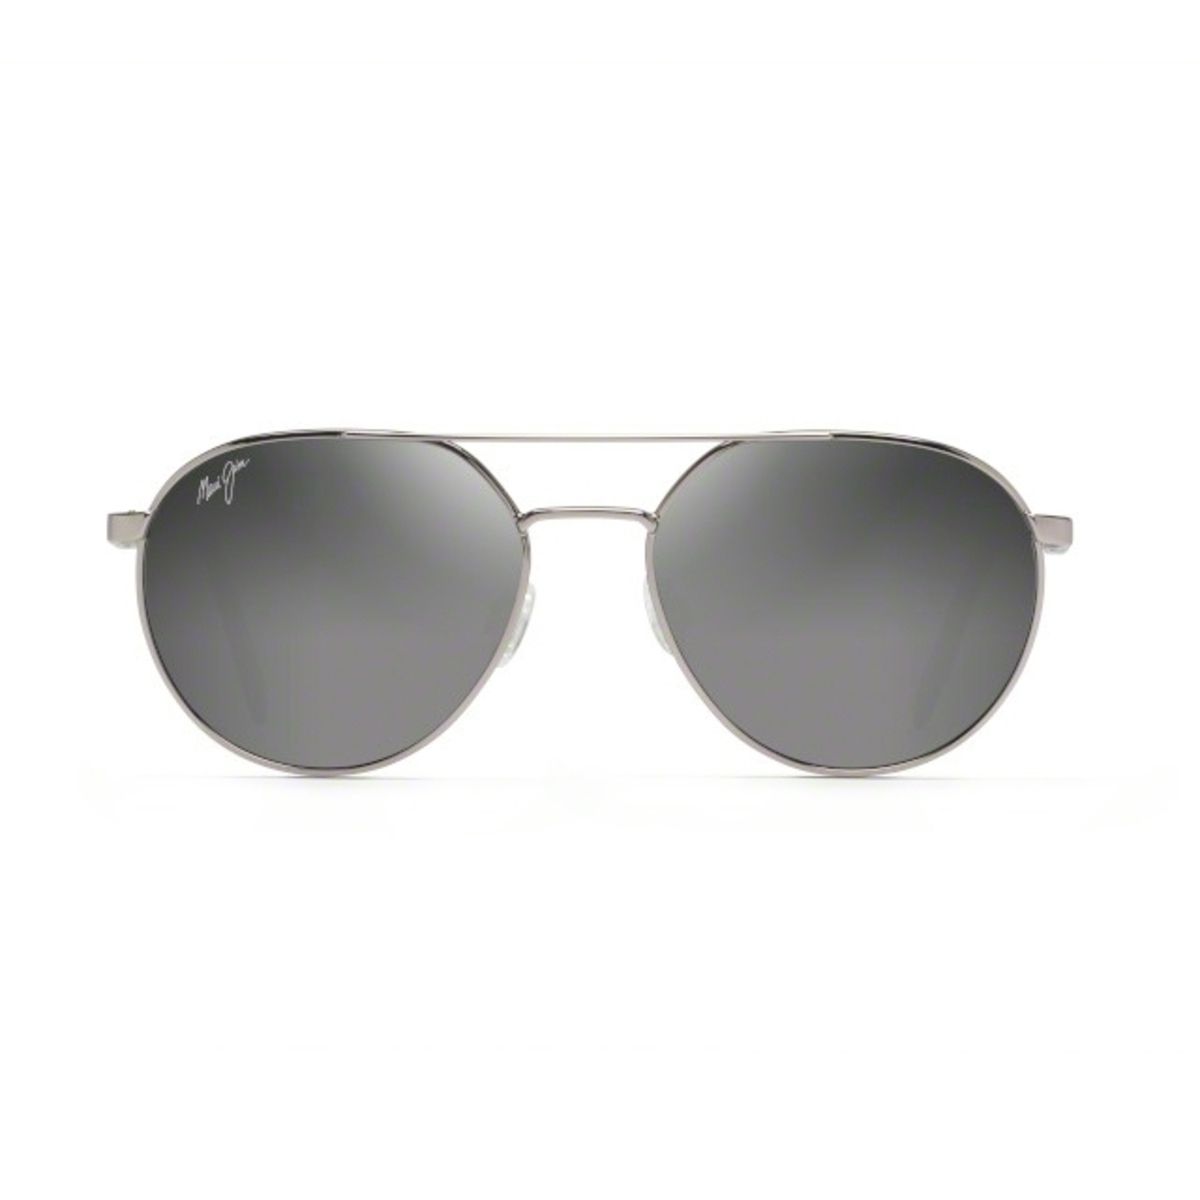 830 Pilot Sunglasses 11 - size 55